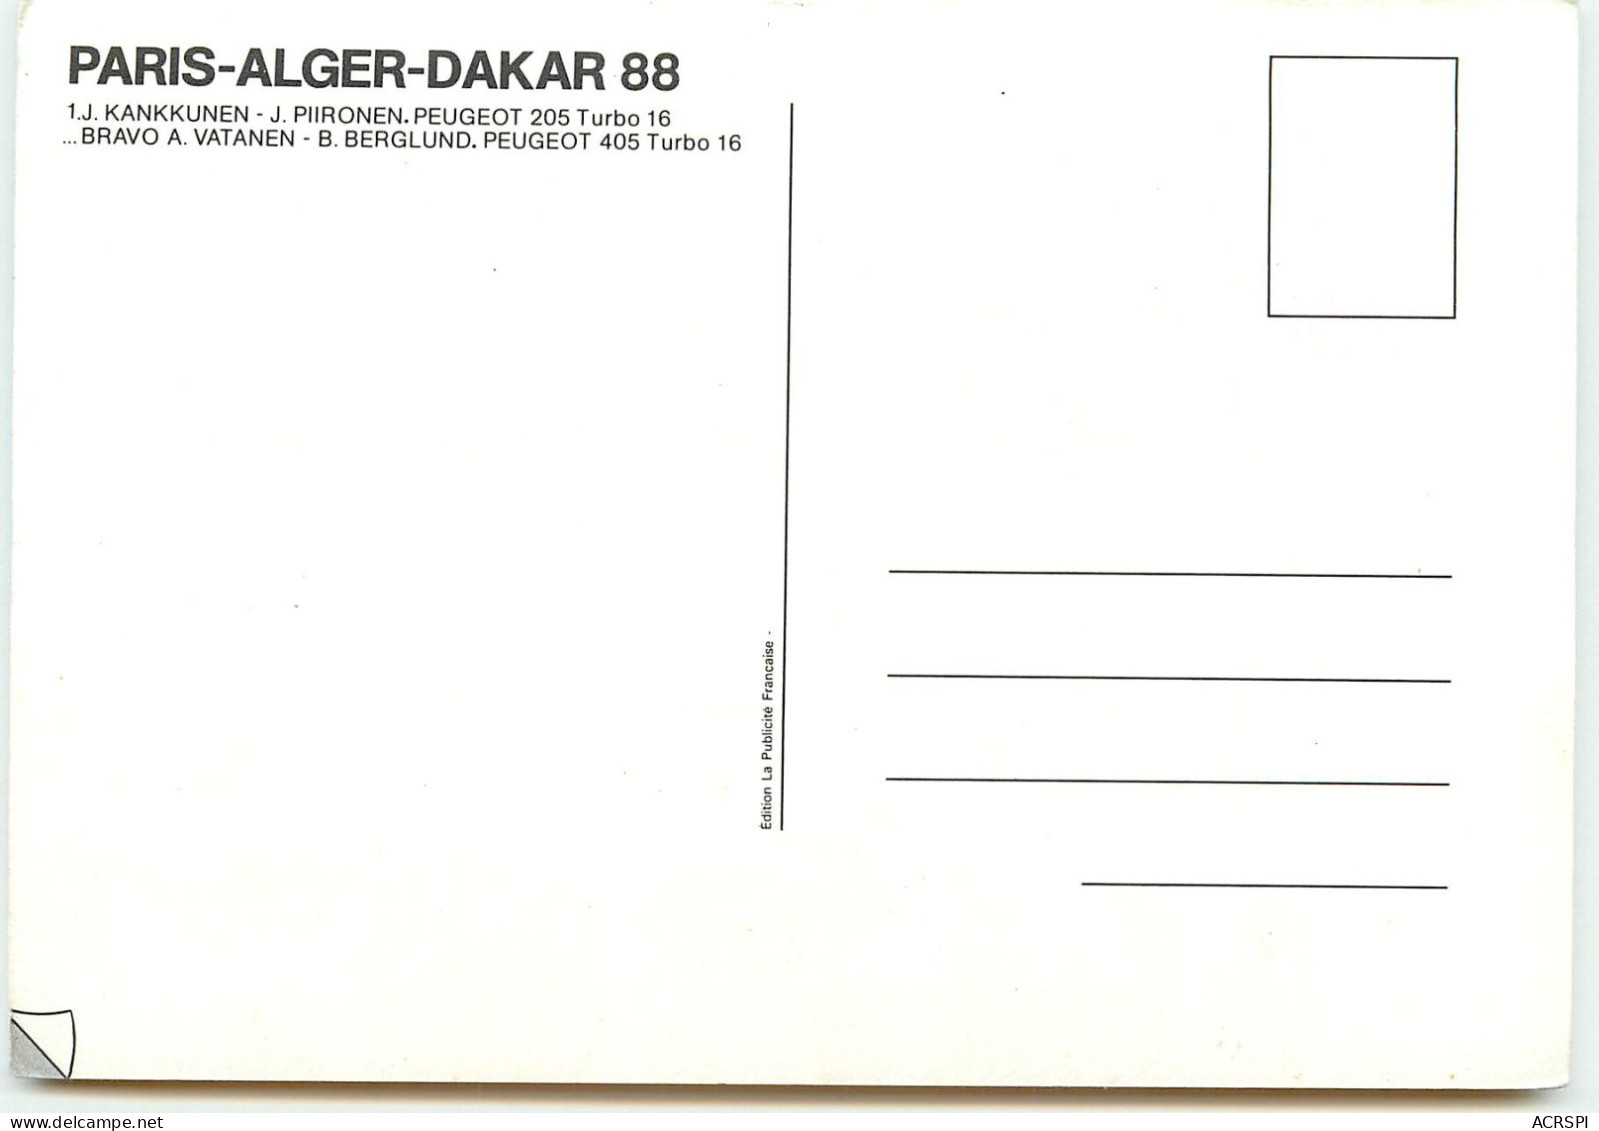 PARIS ALGER DAKAR 1988 Peugeot 205 Turbo 16 KANKKUNEN Piironen Vatanen Berglund(scan Recto-verso) QQ 1174 - Senegal